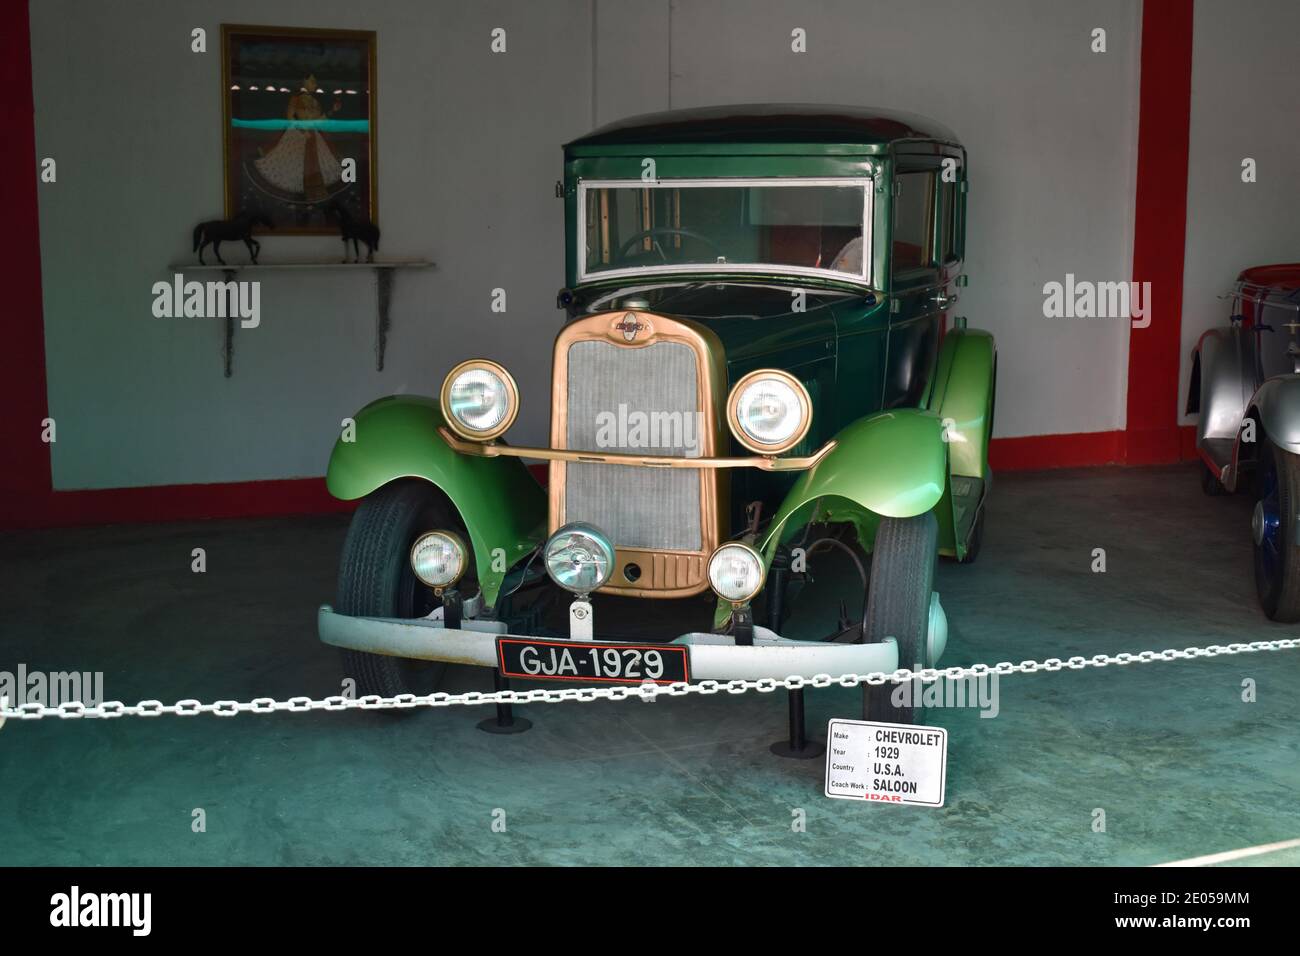 16 Nov 2020, Auto World Vintage Car Museum. Ahmedabad, Gujarat, India. CHEVROLET, YEAR 1929, U.S.A, SALOON Stock Photo